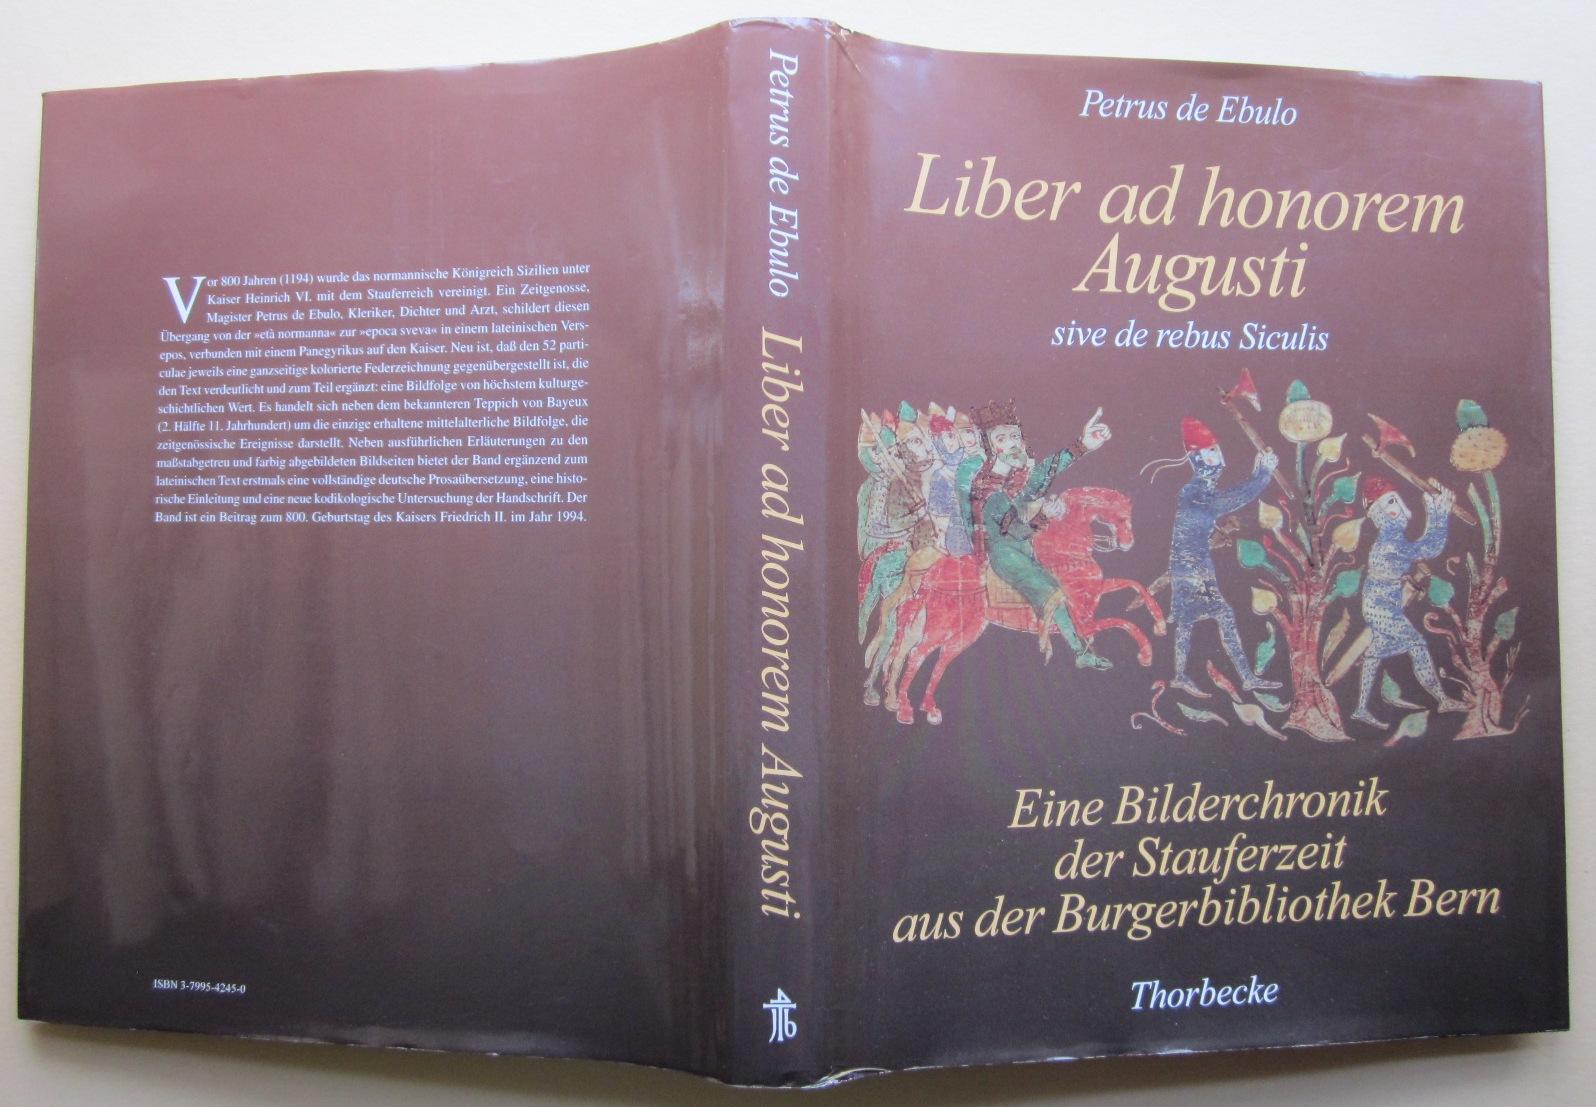 Petrus de Ebulo. Liber ad honorem Augusti sive de rebus Siculis: Codex 120 II der Burgerbibliothek Bern